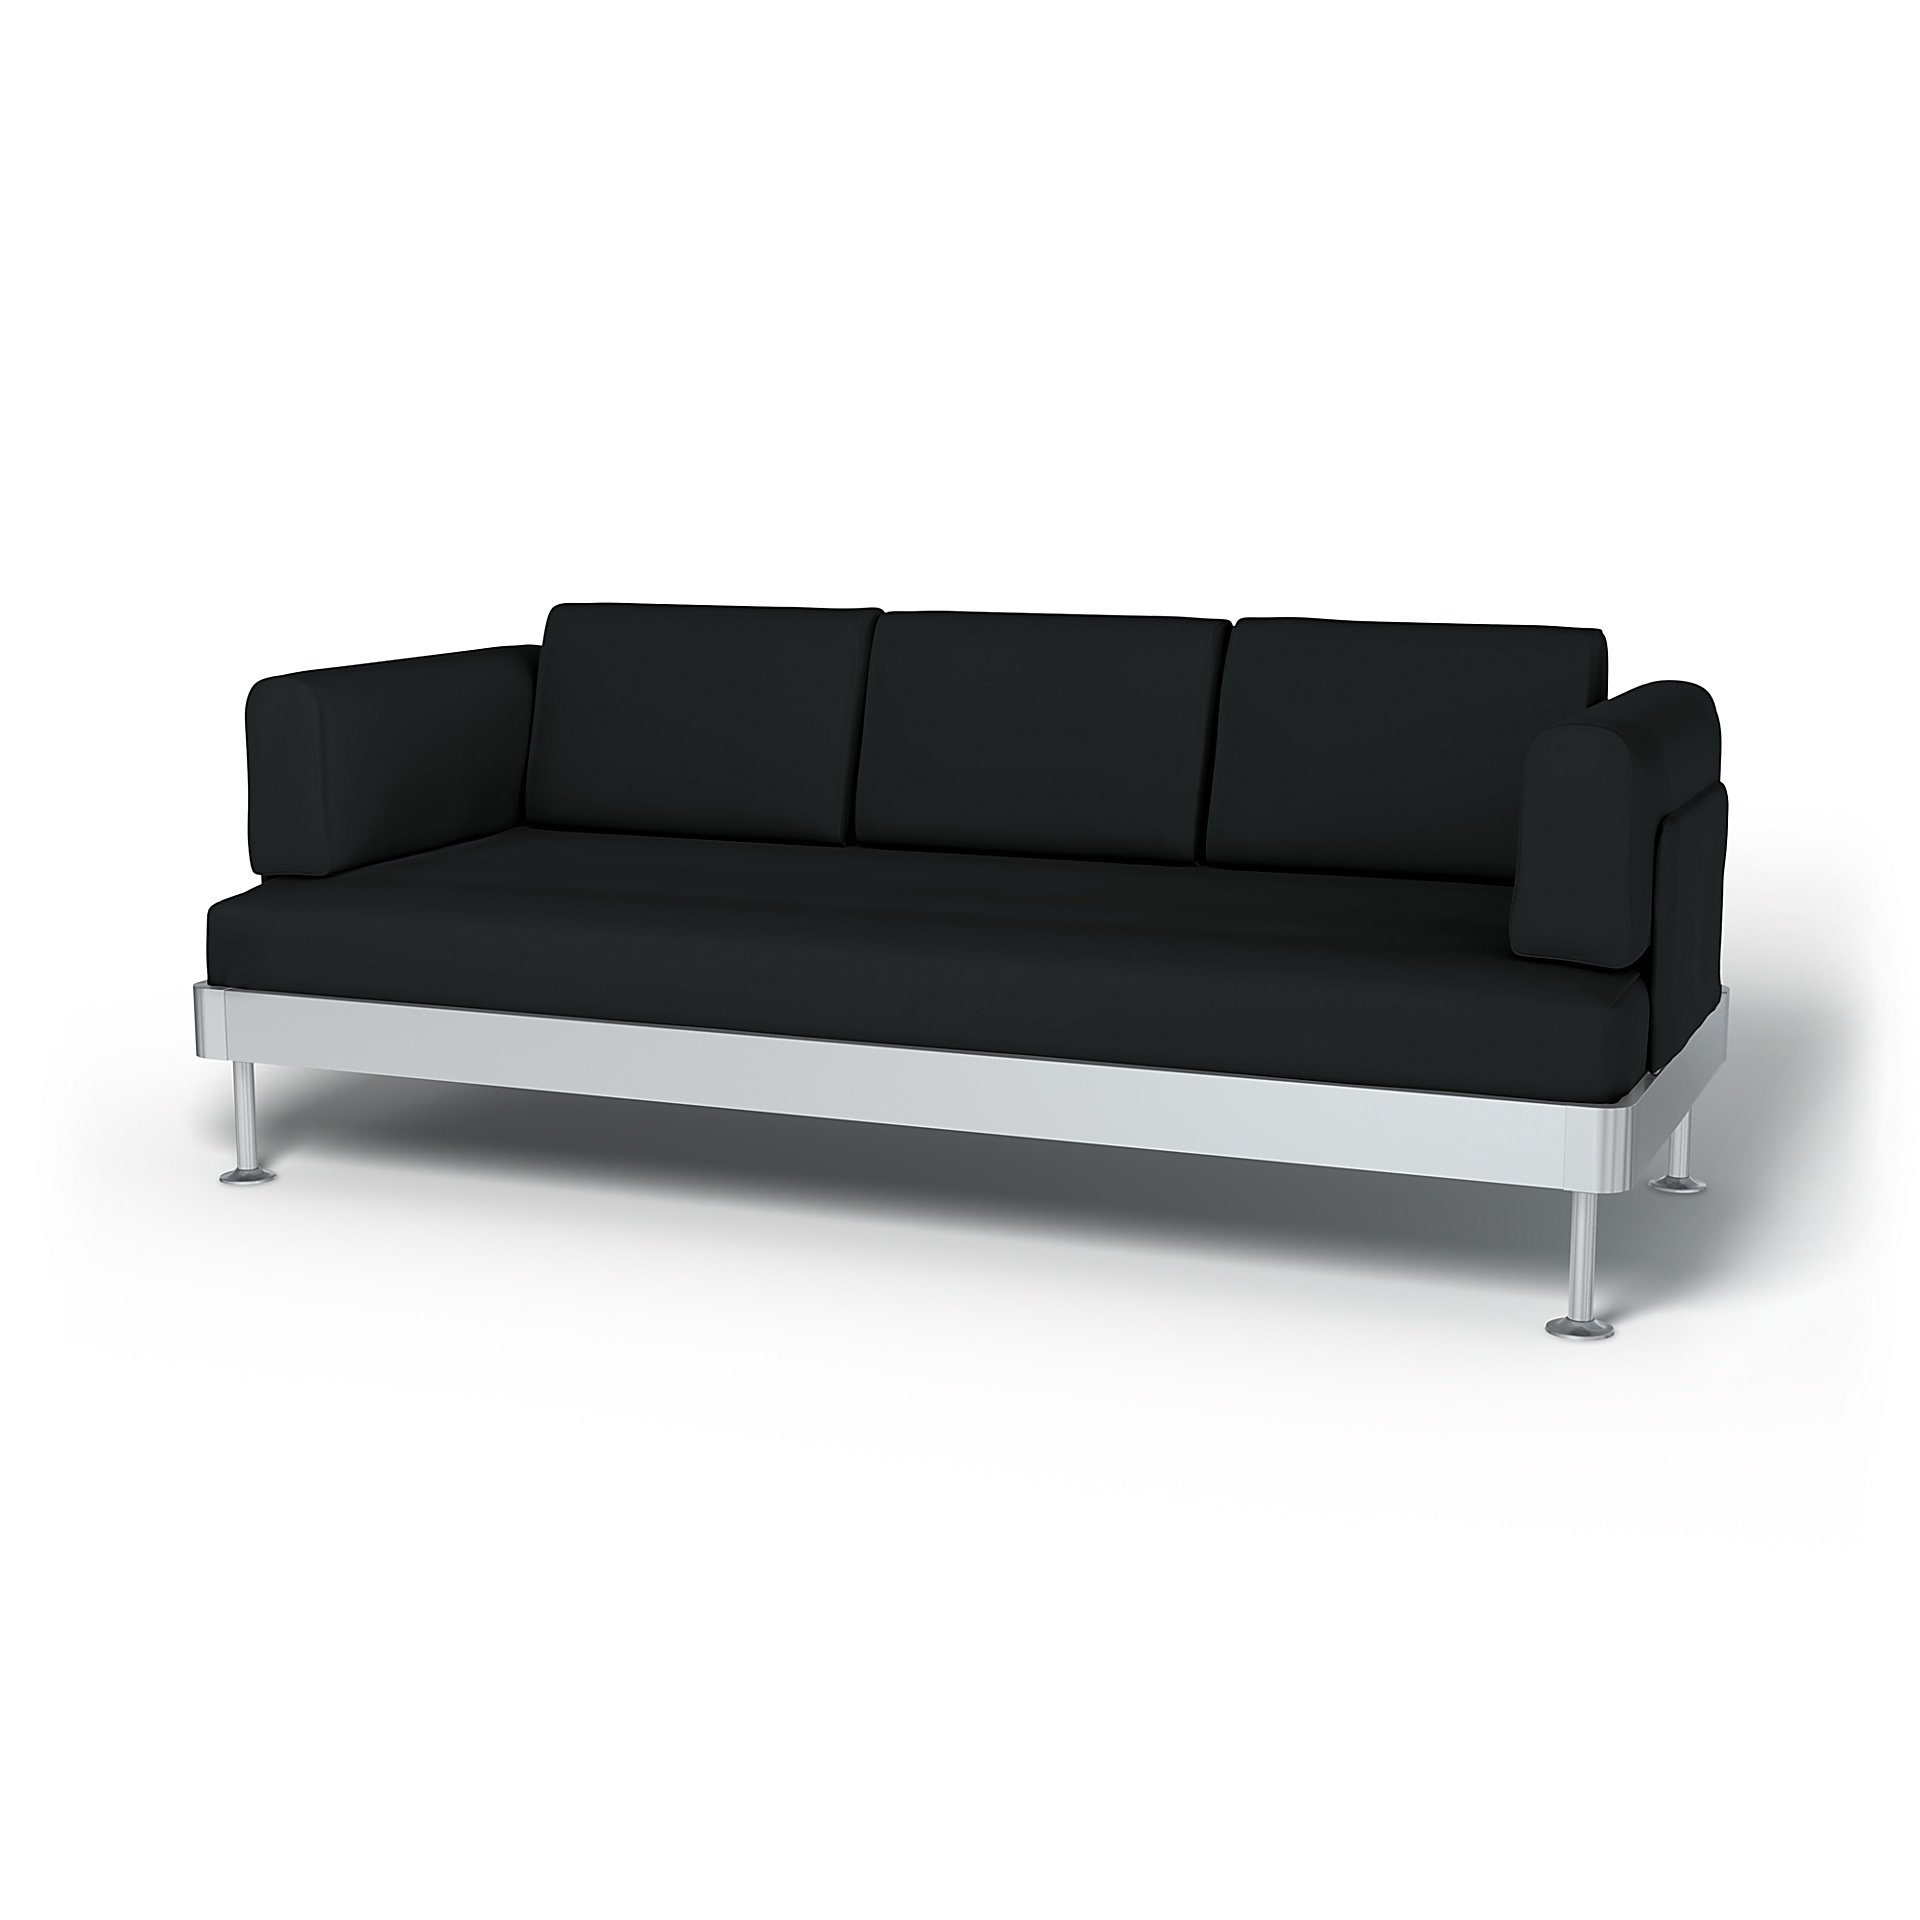 IKEA - Delaktig 3 Seater Sofa Cover, Jet Black, Cotton - Bemz